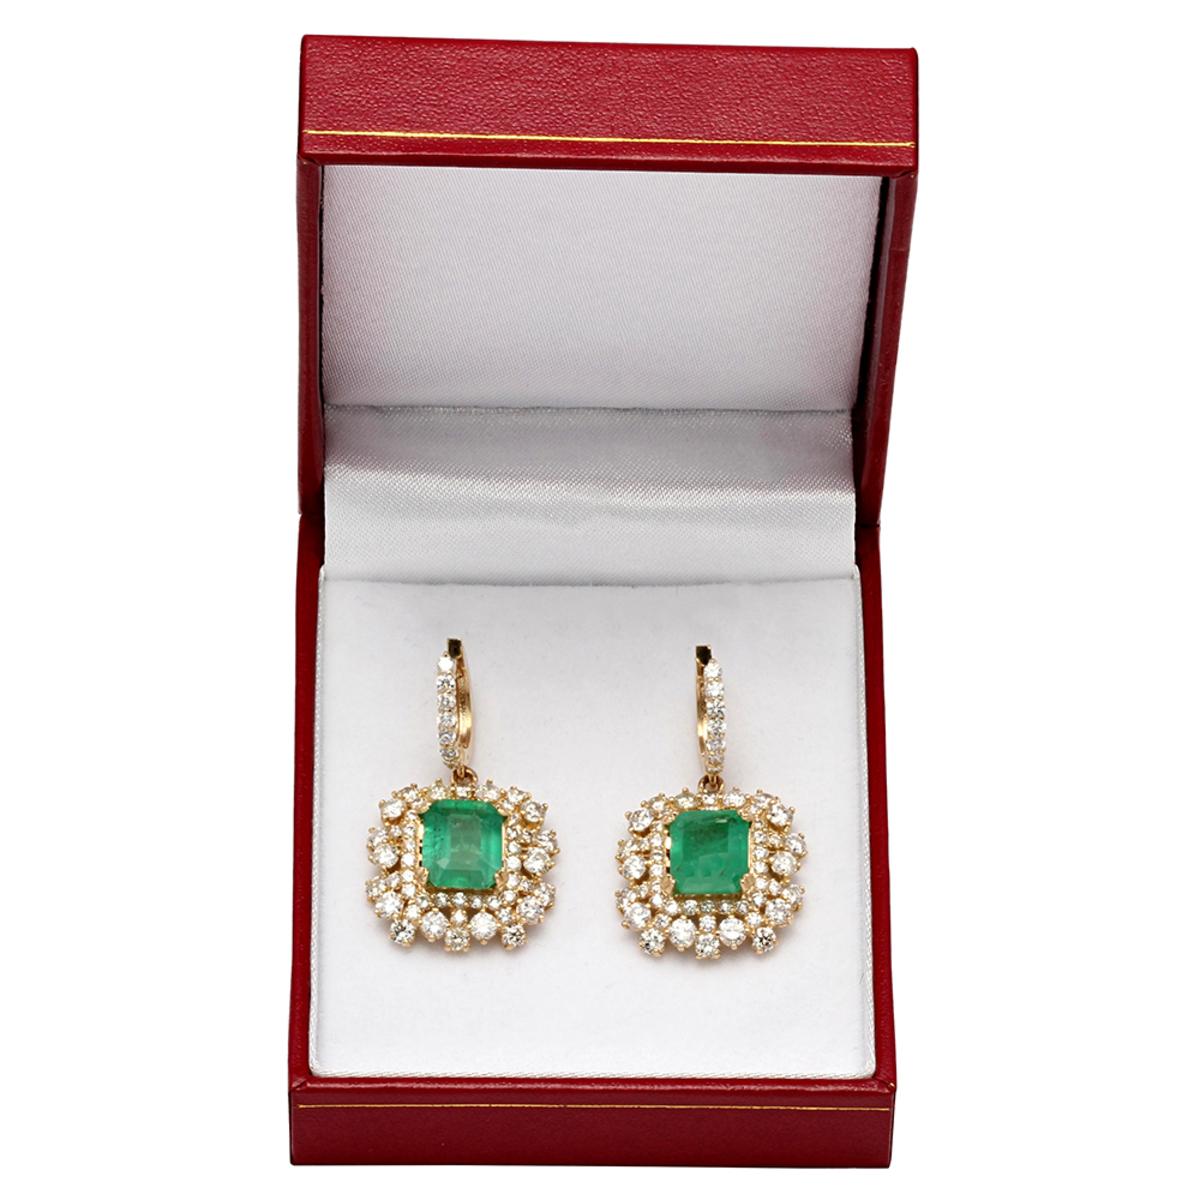 14k Yellow Gold 6.32ct Emerald 5.89ct Diamond Earrings